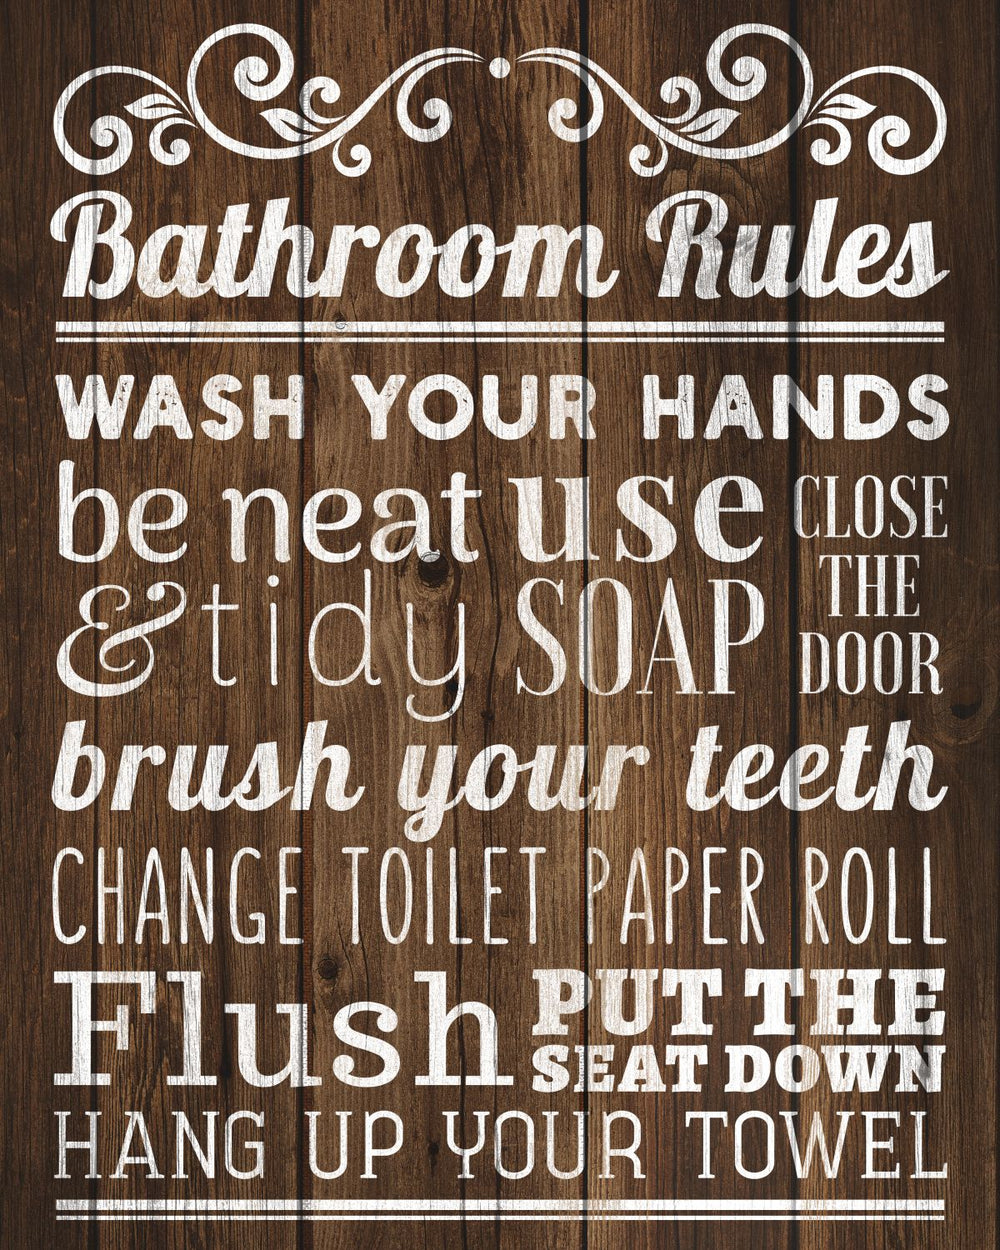 Classic Bathroom Rules